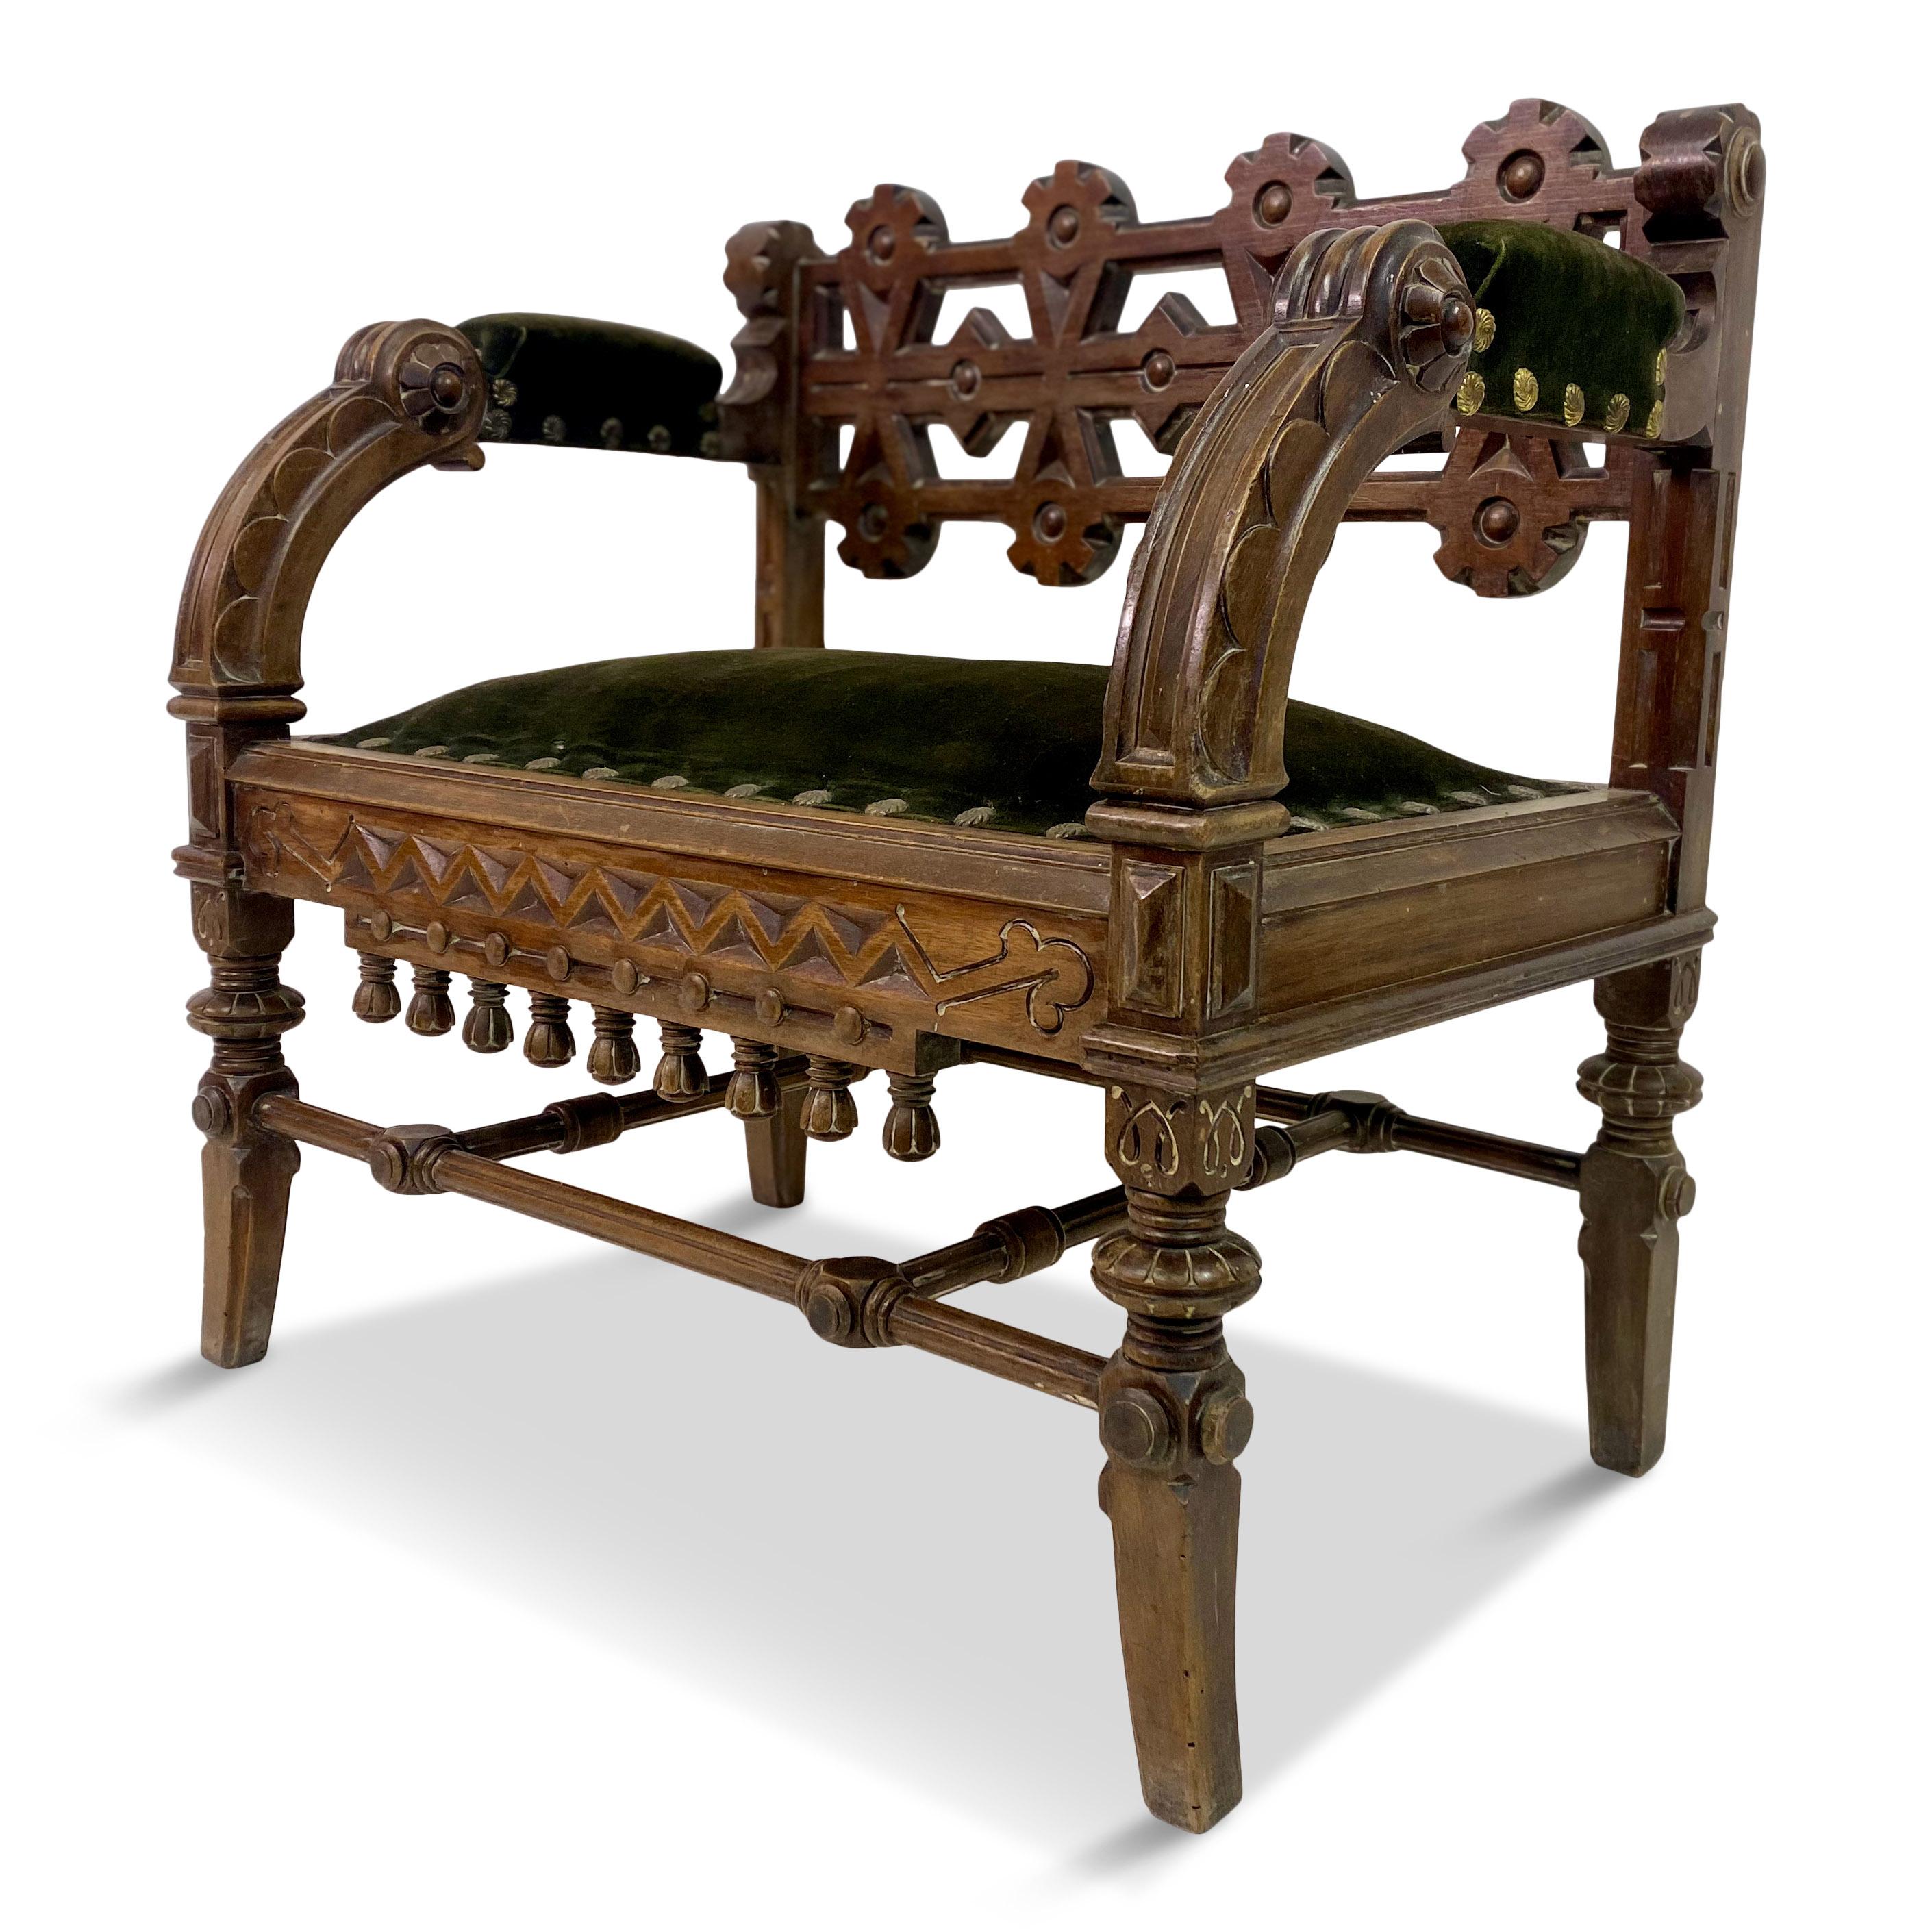 Gothic chair

American Aesthetic Movement

Walnut

Original velvet upholstery

19th Century America

46cm seat height.